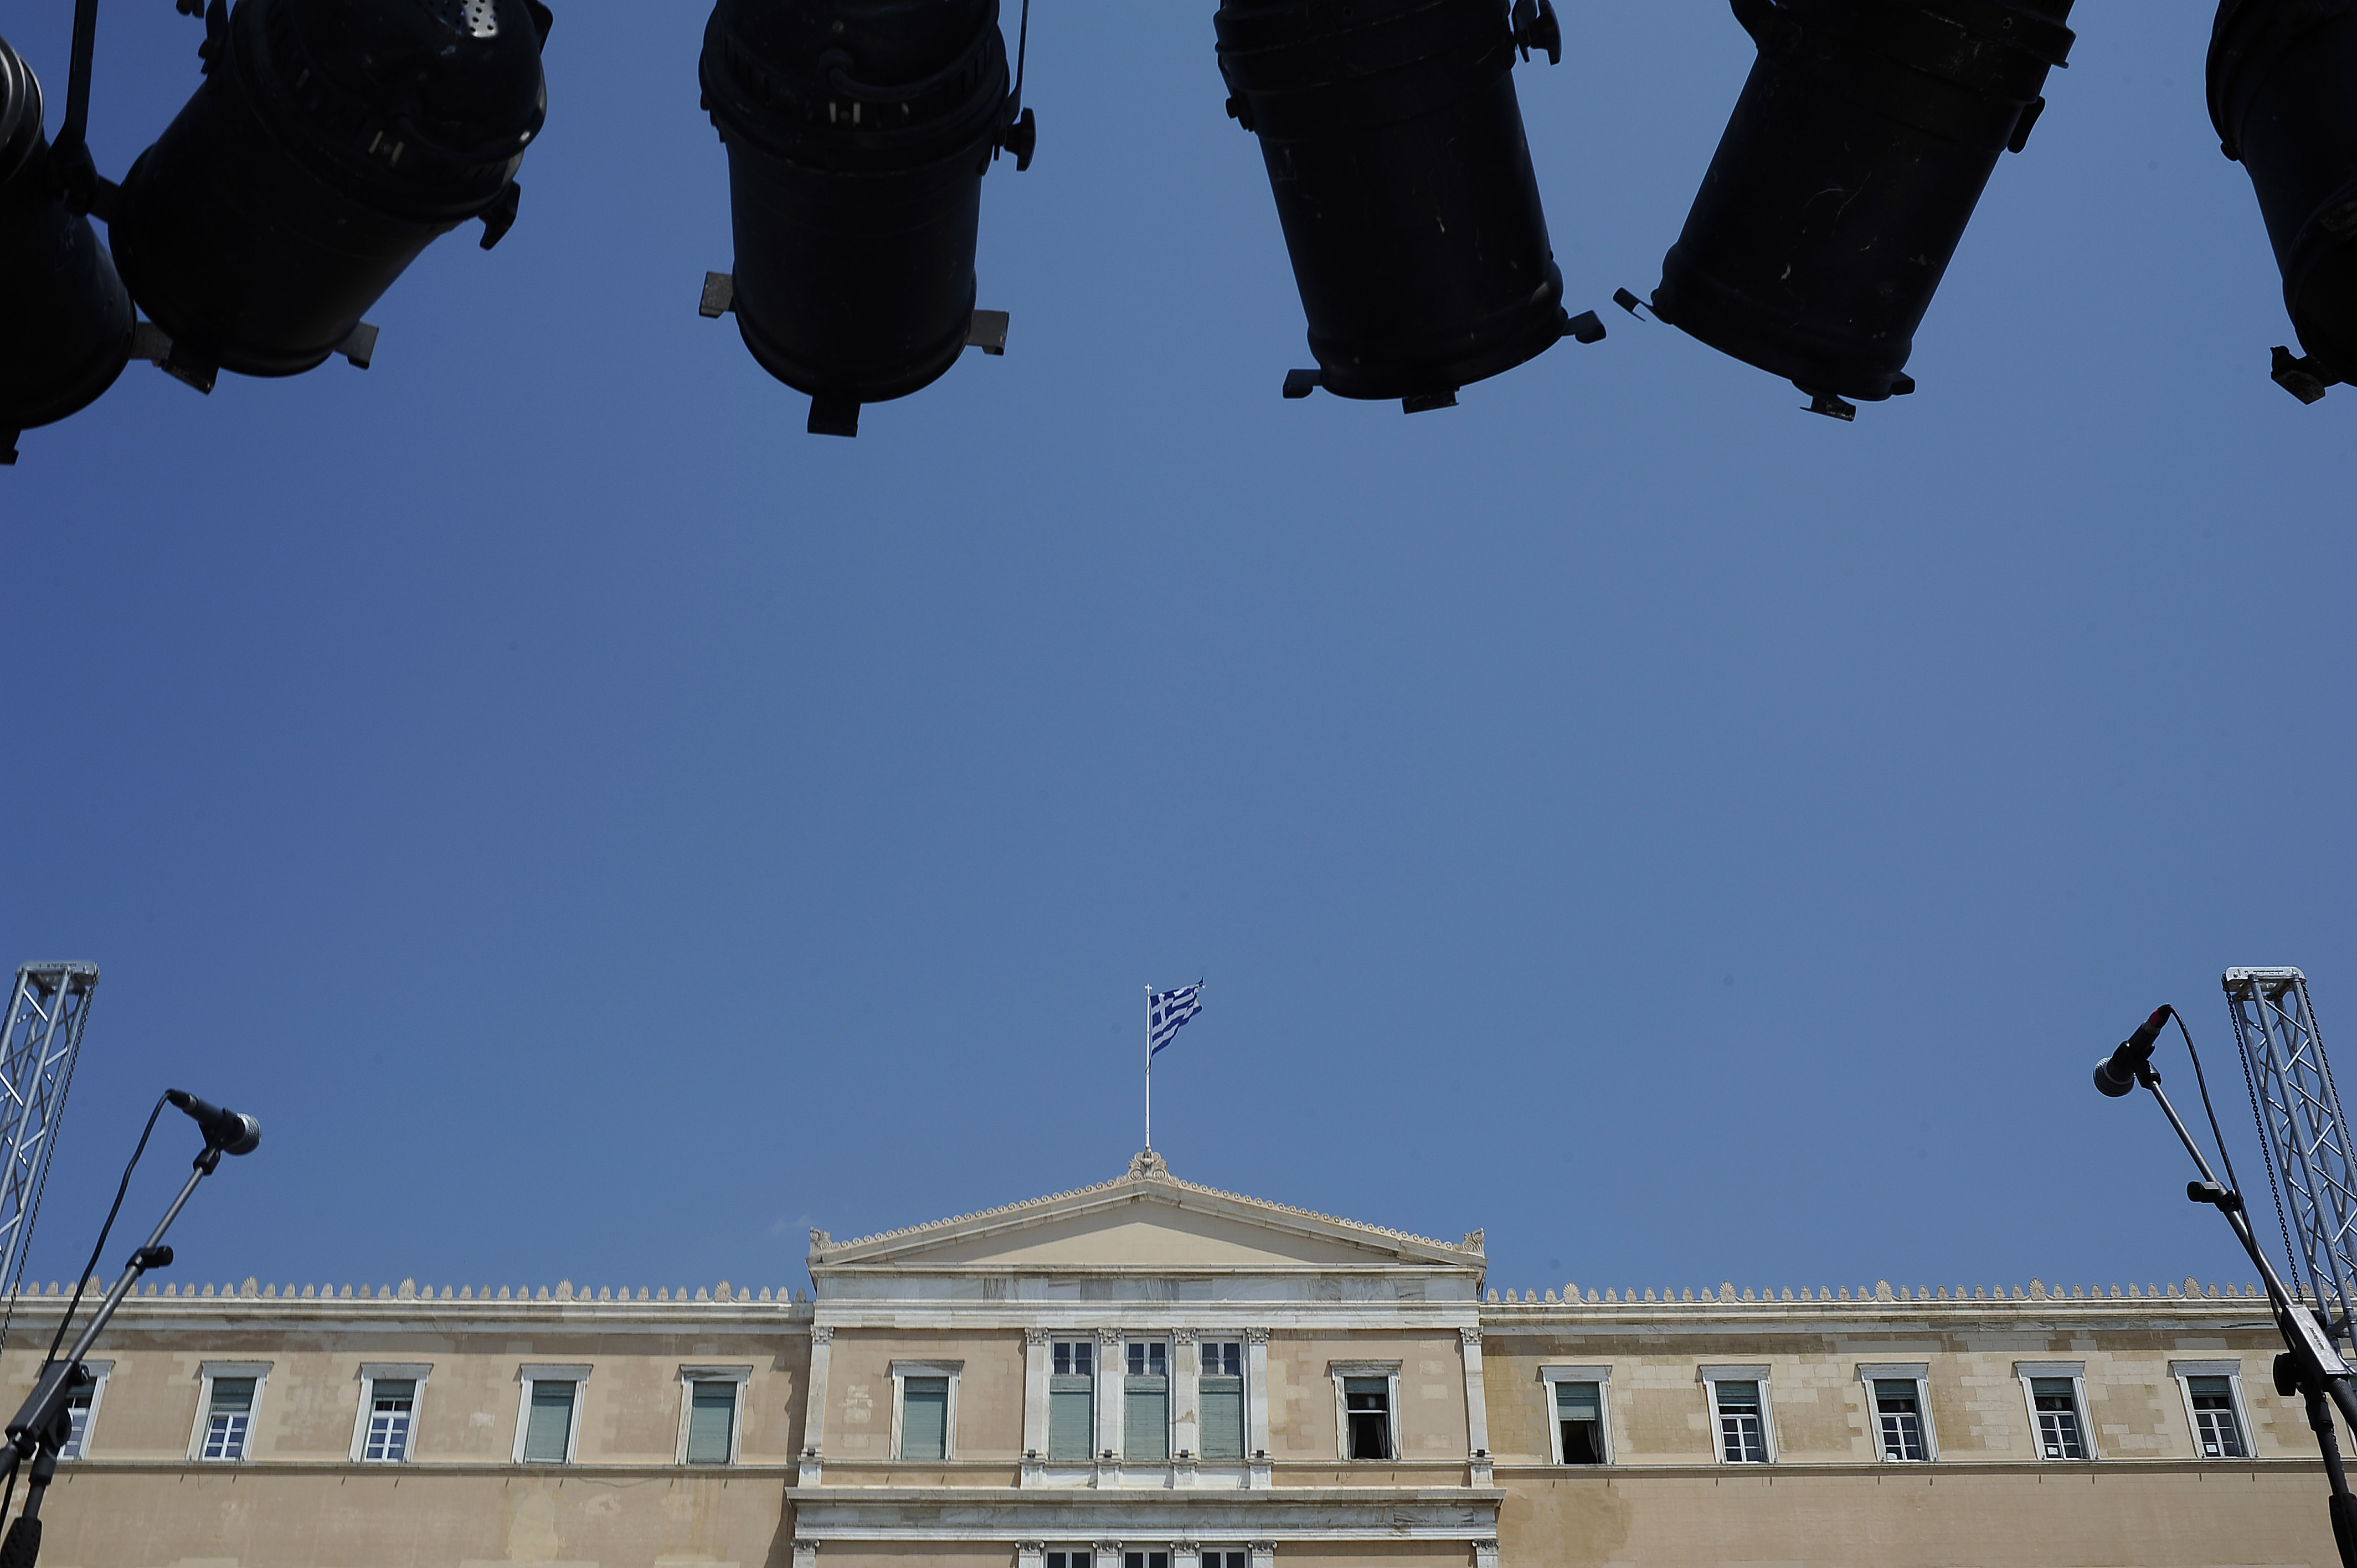 Novartis: Ολα για το πολυεθνικό κόλπο που συγκλονίζει την Ελλάδα – Αλήθειες, ψέματα, μεθοδεύσεις, κενά και πρόθυμοι μάρτυρες, γεμάτοι αντιφάσεις